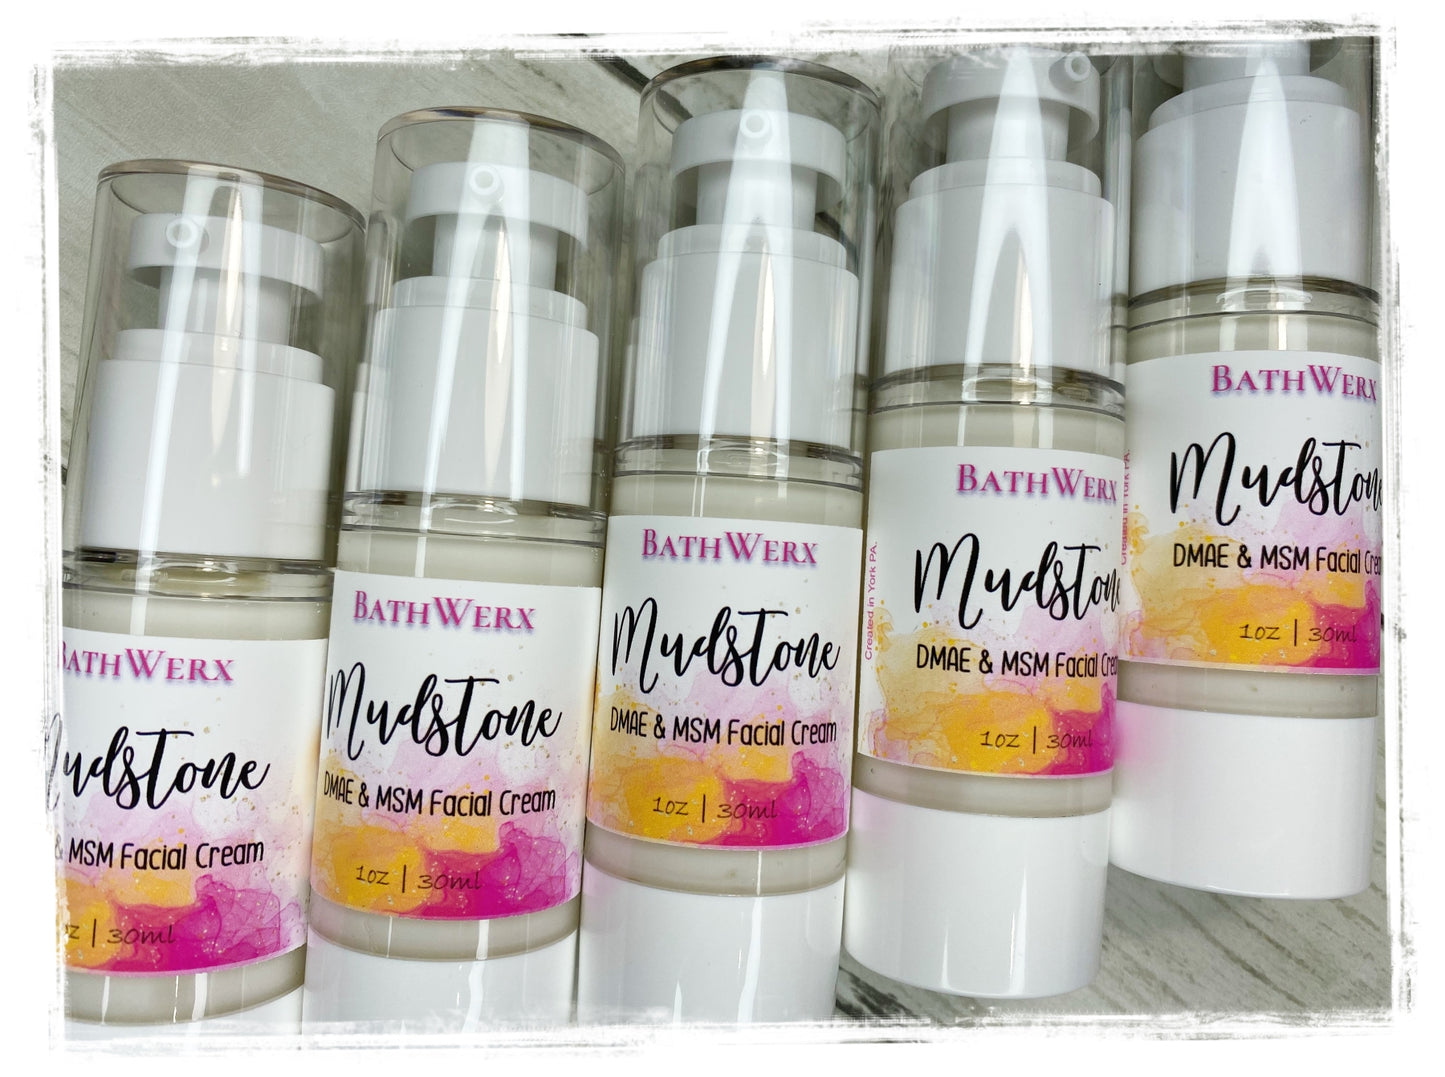 Mudstone: DMAE & MSM Face Cream